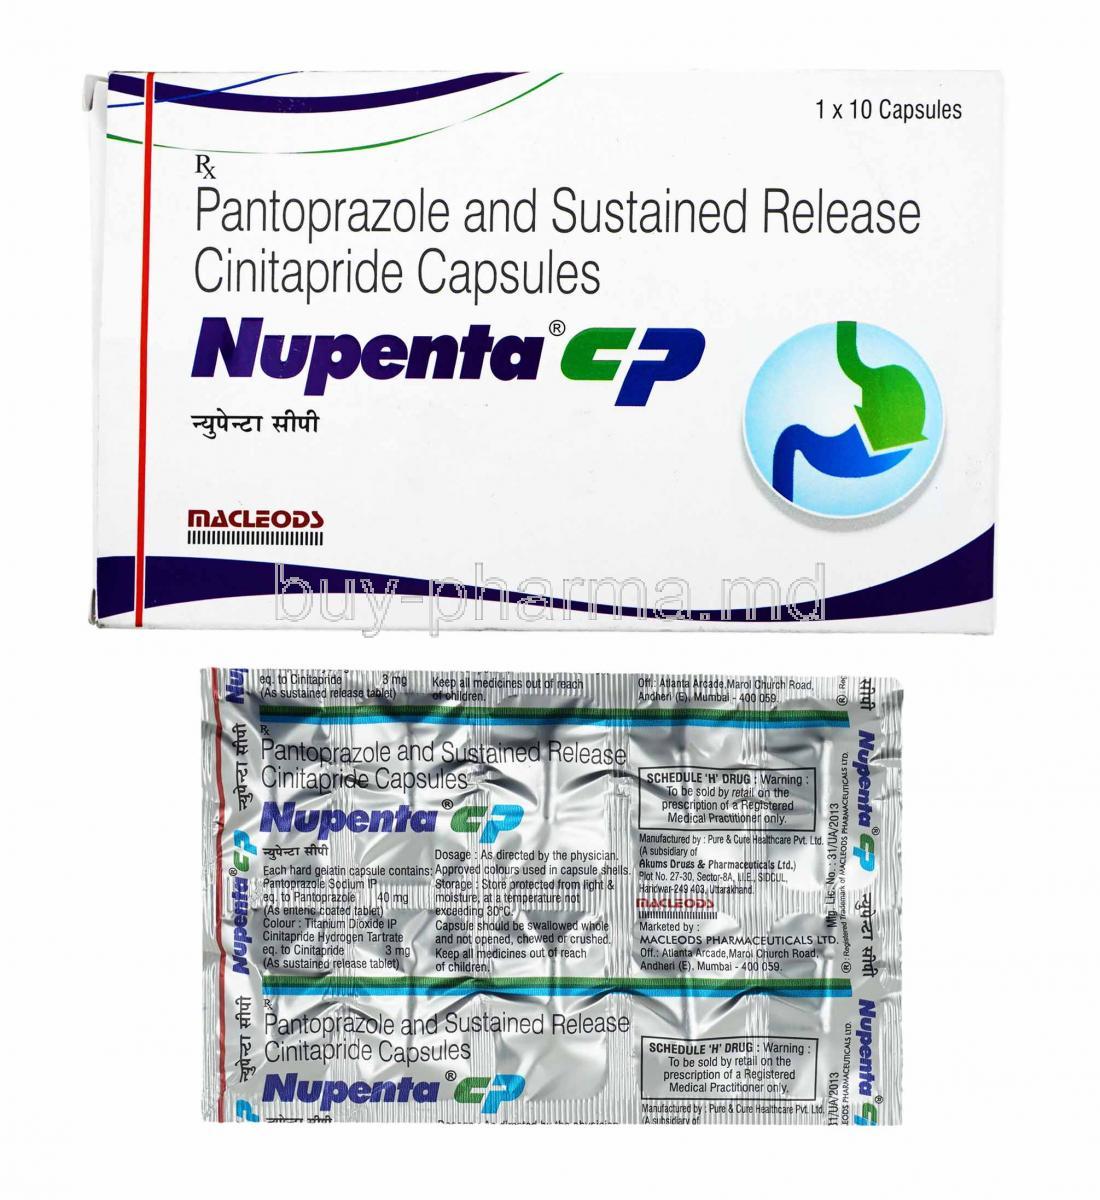 Nupenta CP, Cinitapride and Pantoprazole box and capsules